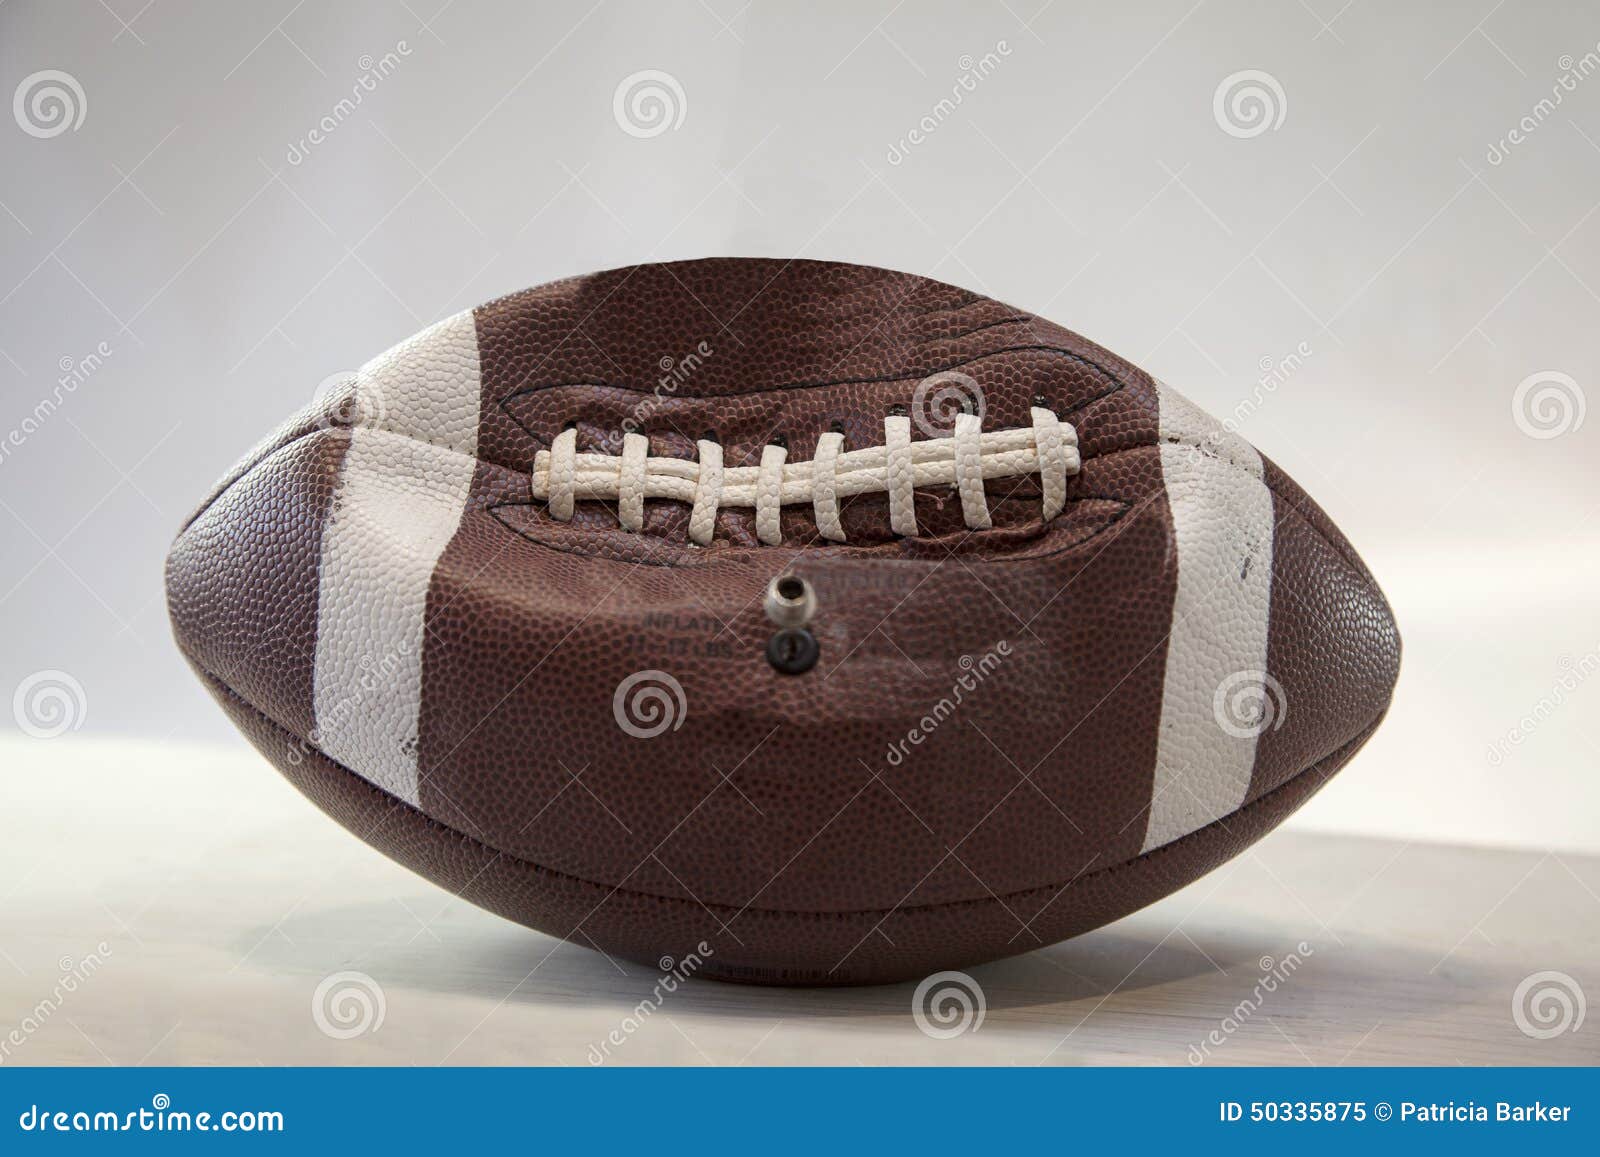 partially deflated football